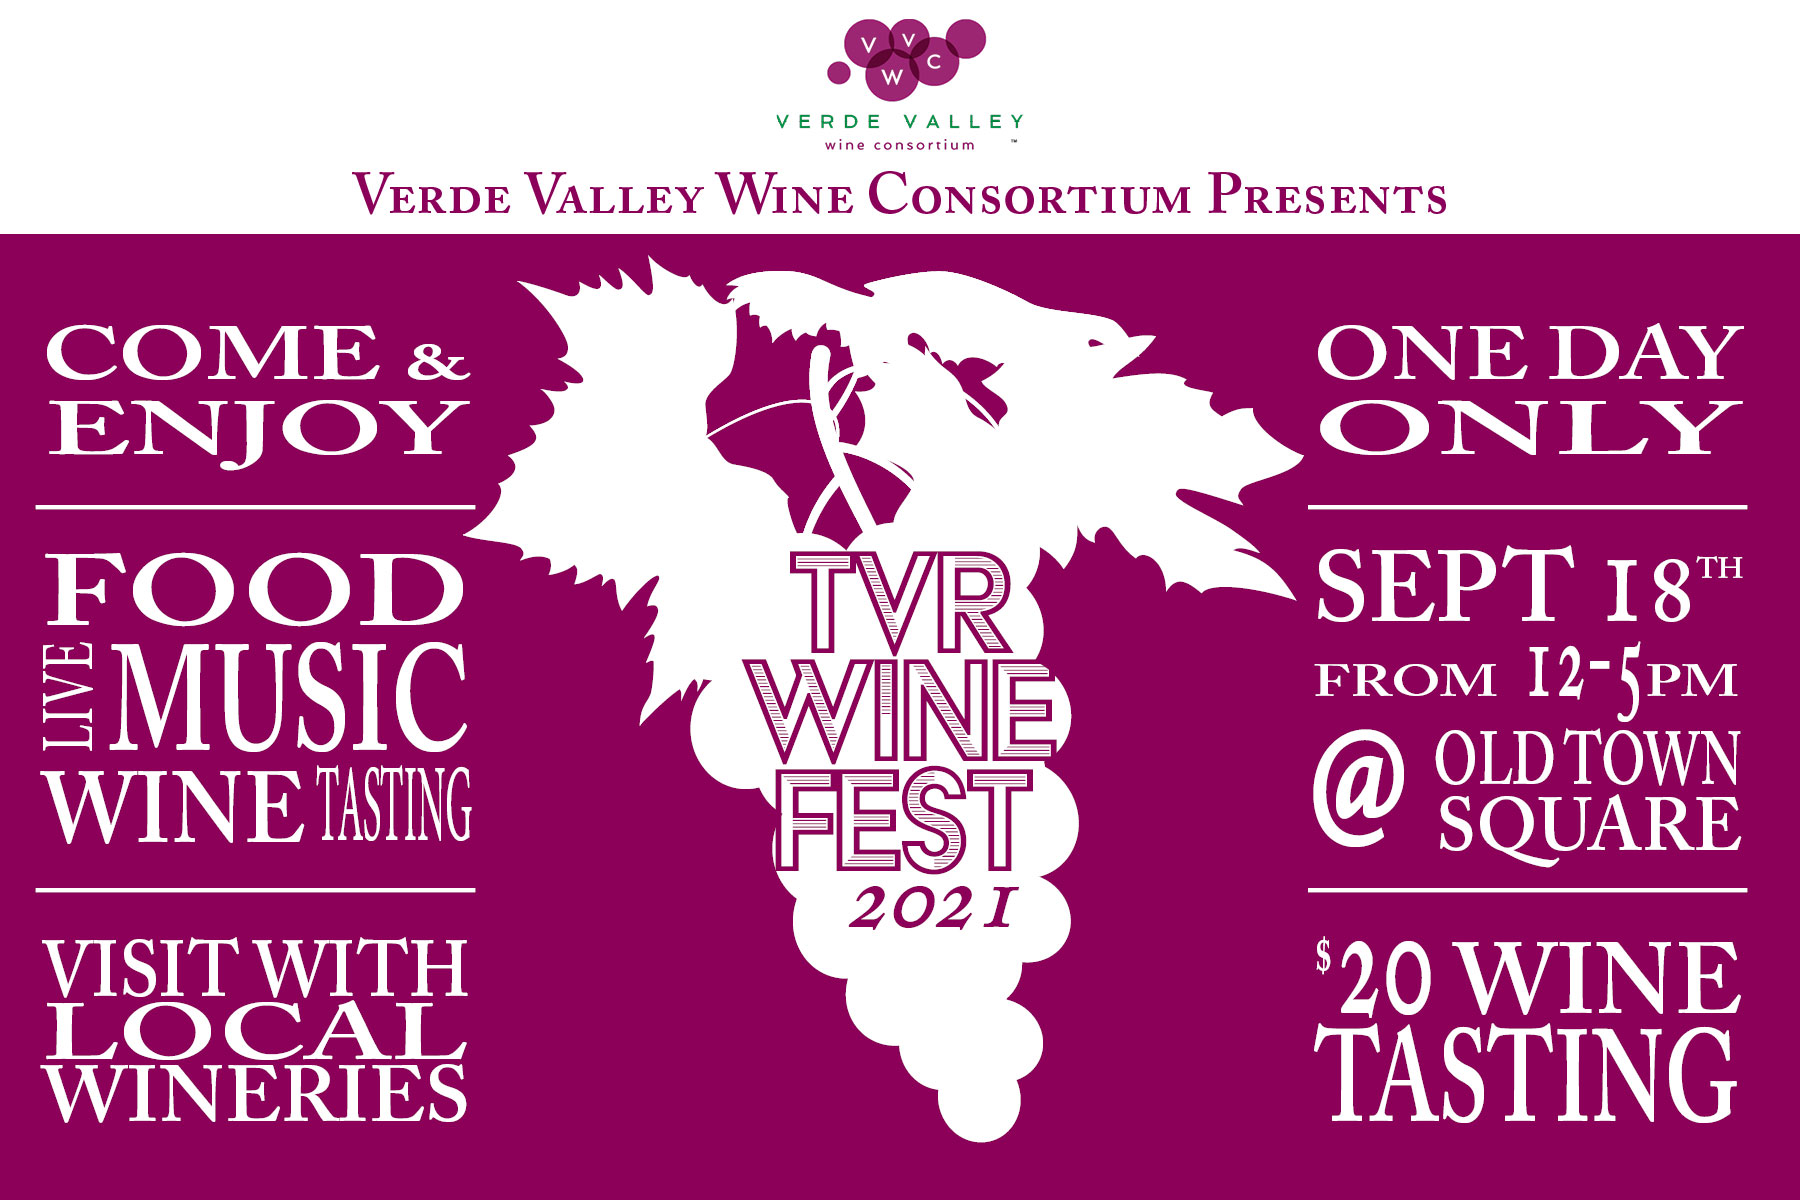 TVR Wine Fest